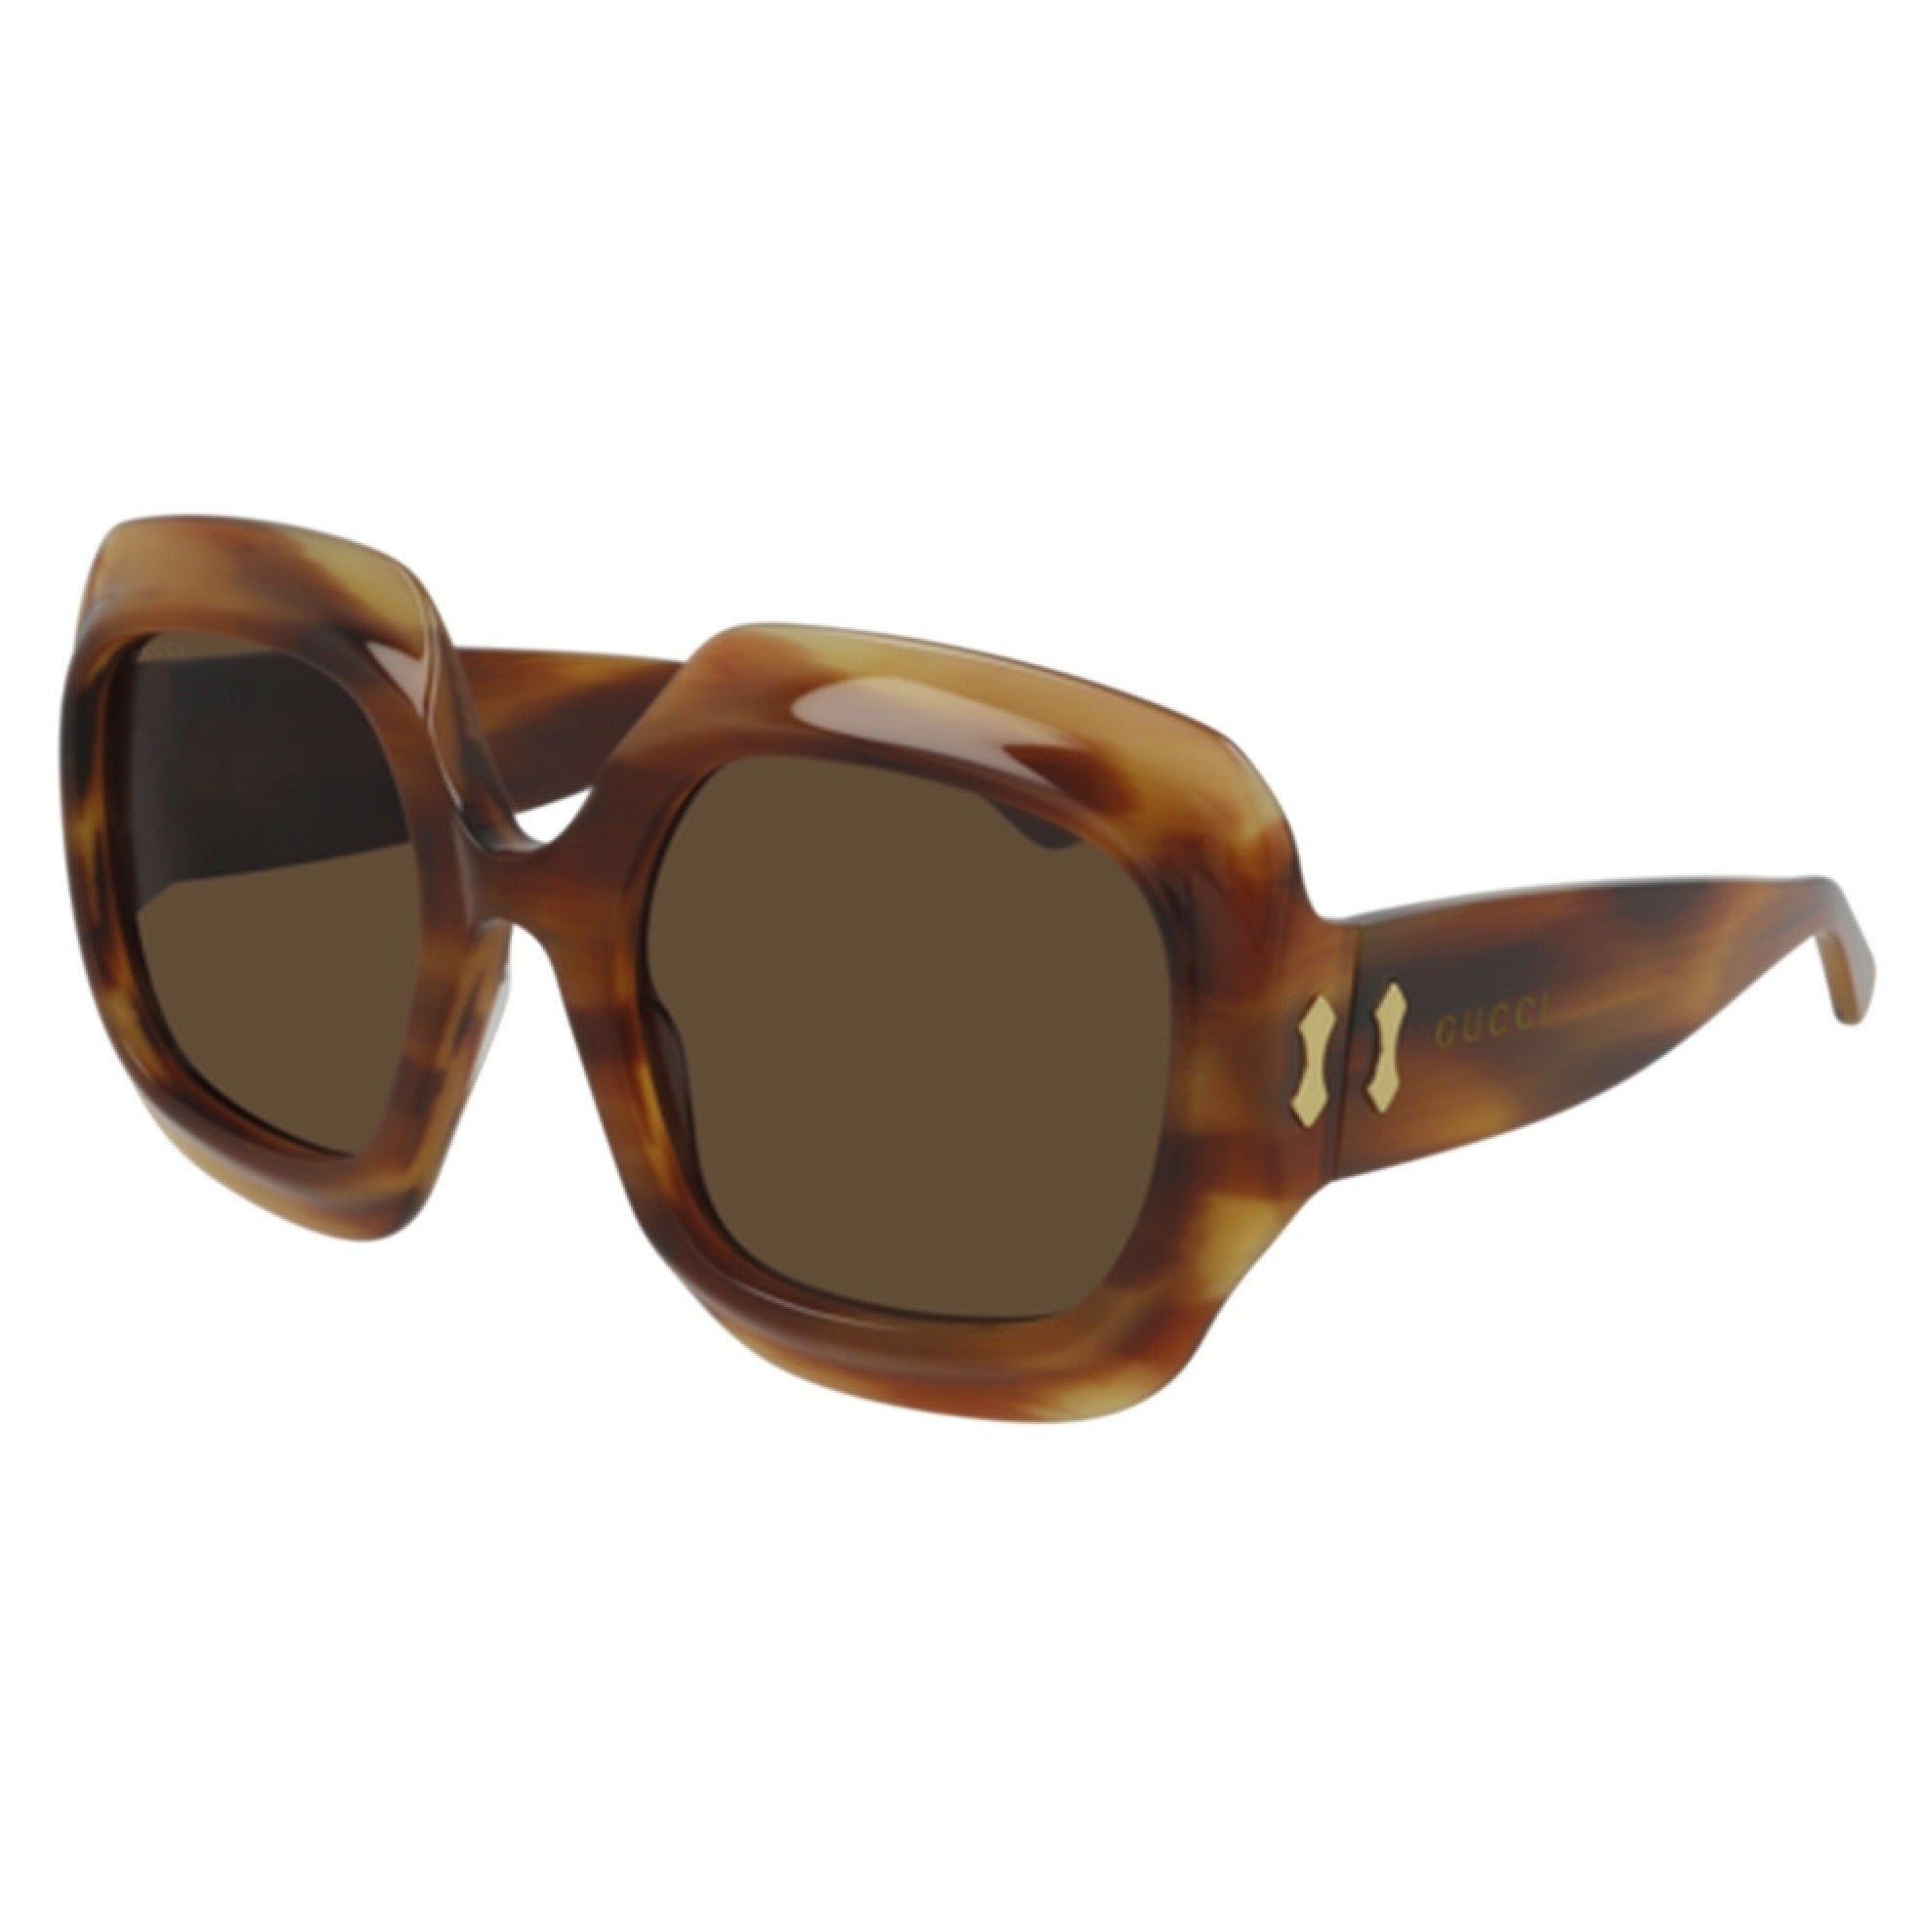 Gucci Women's Sunglasses Oversized Square Tortoise GG0988S-002 59